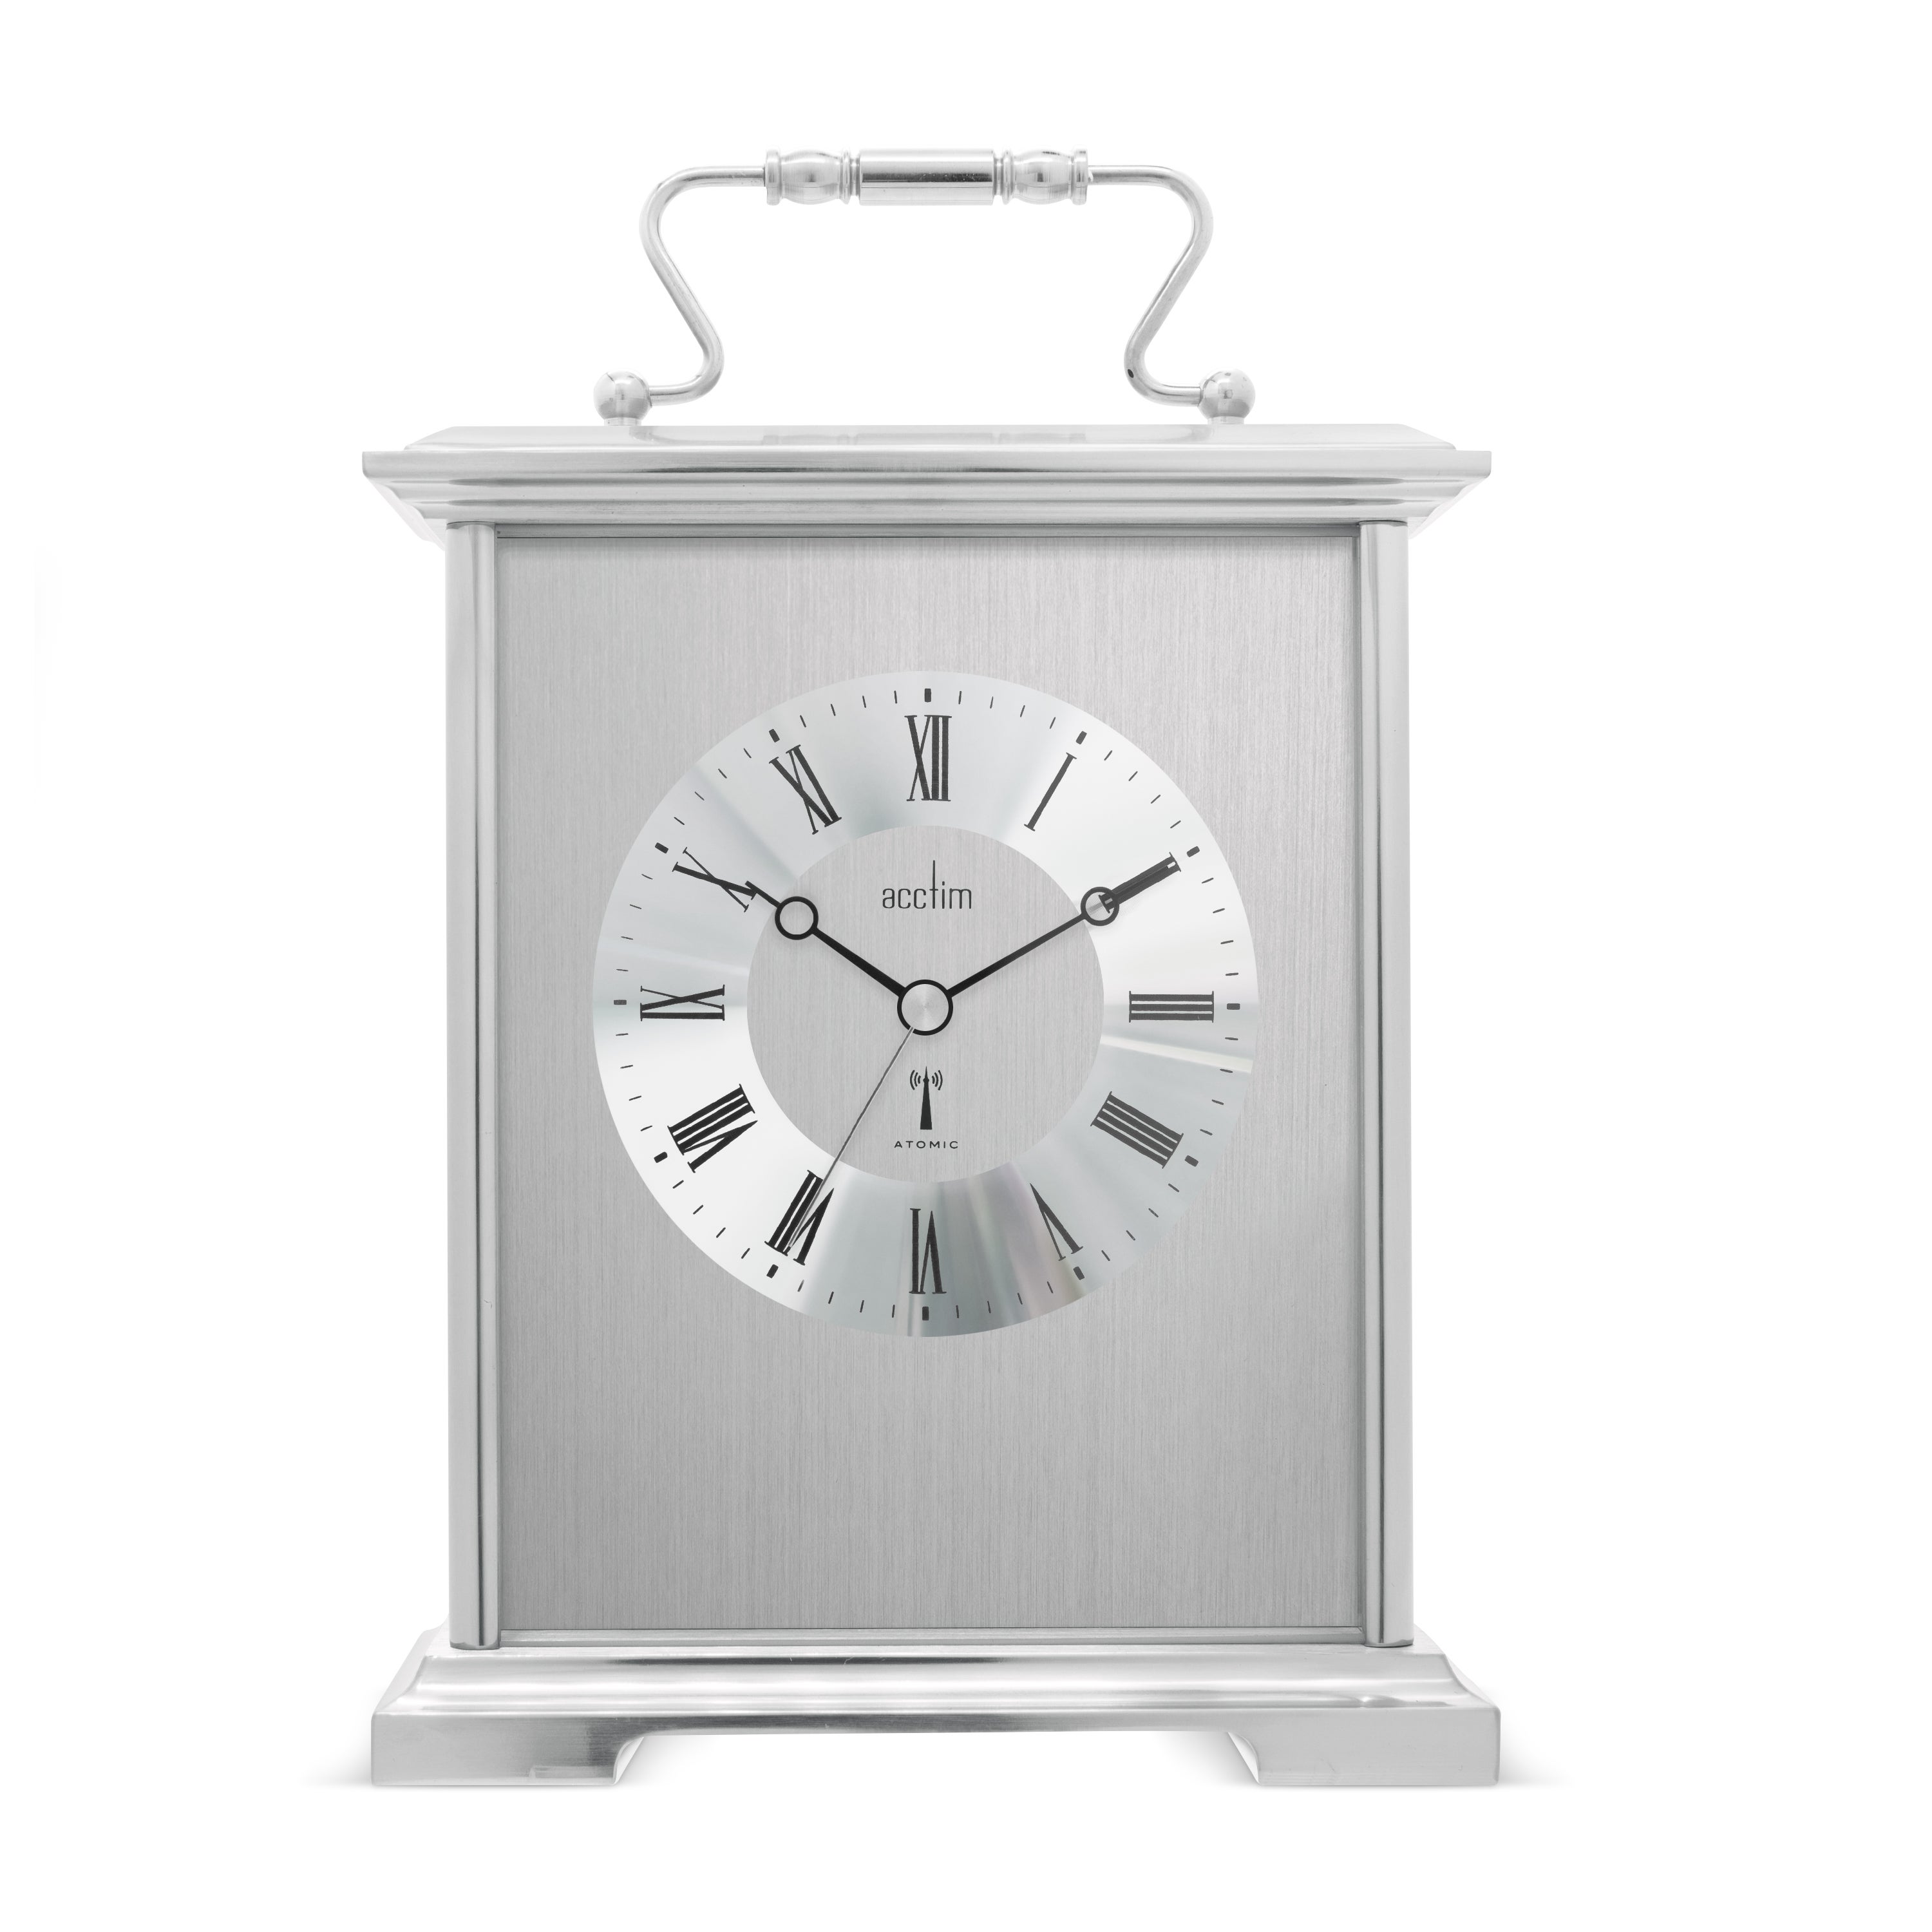 Image of Acctim Althorp Mantel Clock Quartz Polished Metal Carriage Clock Silver